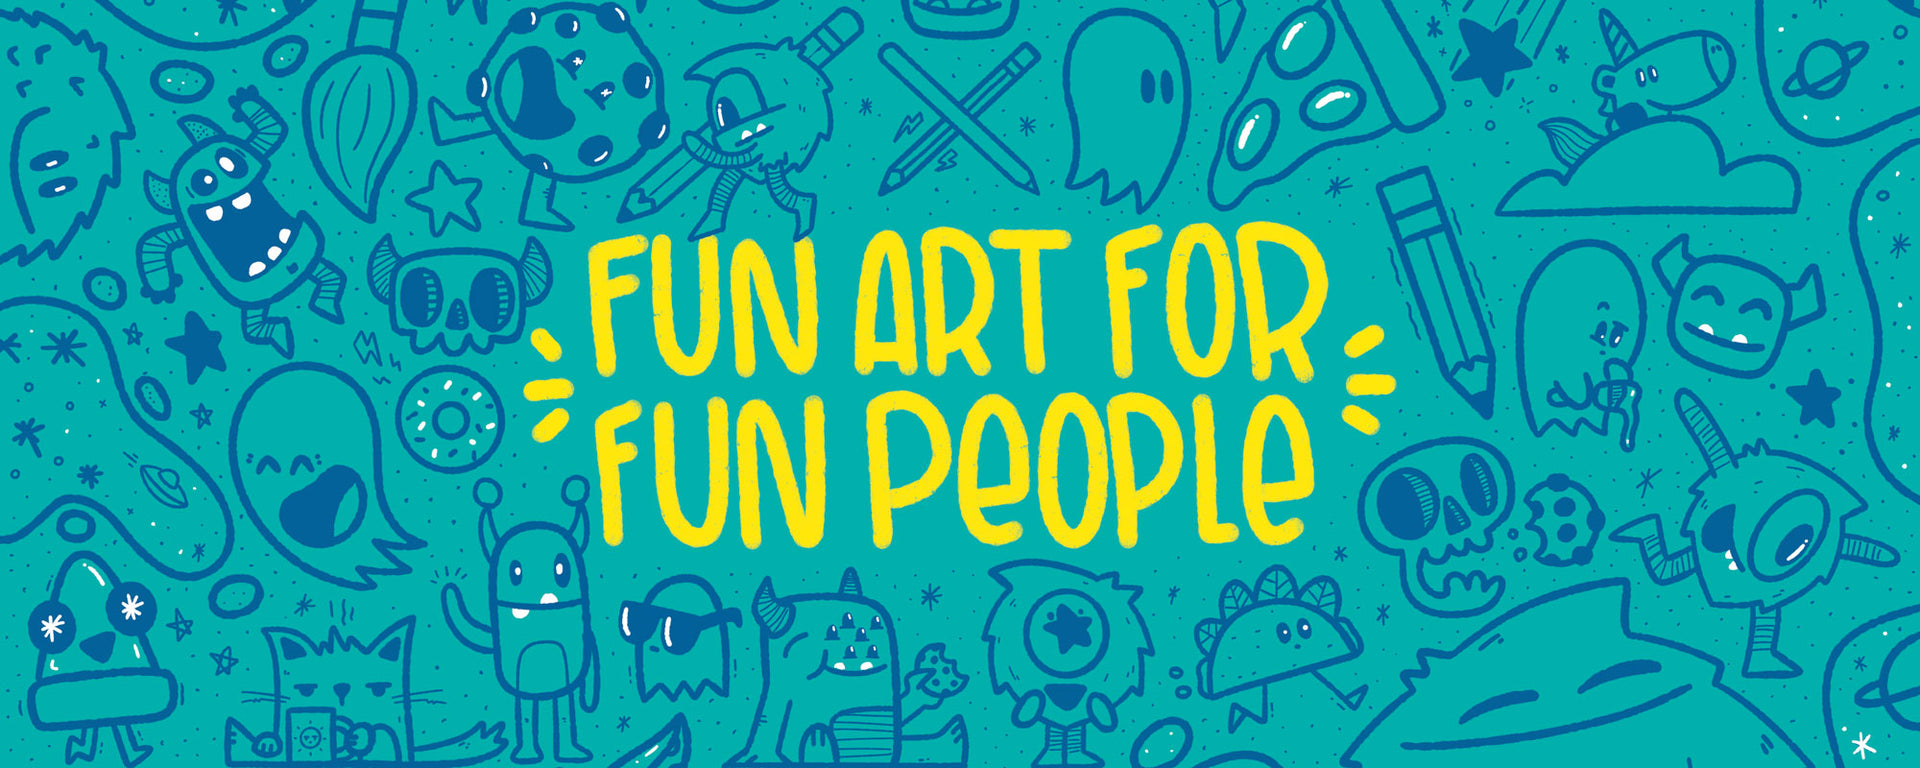 a super fun doodle art banner that says "fun art for fun people"